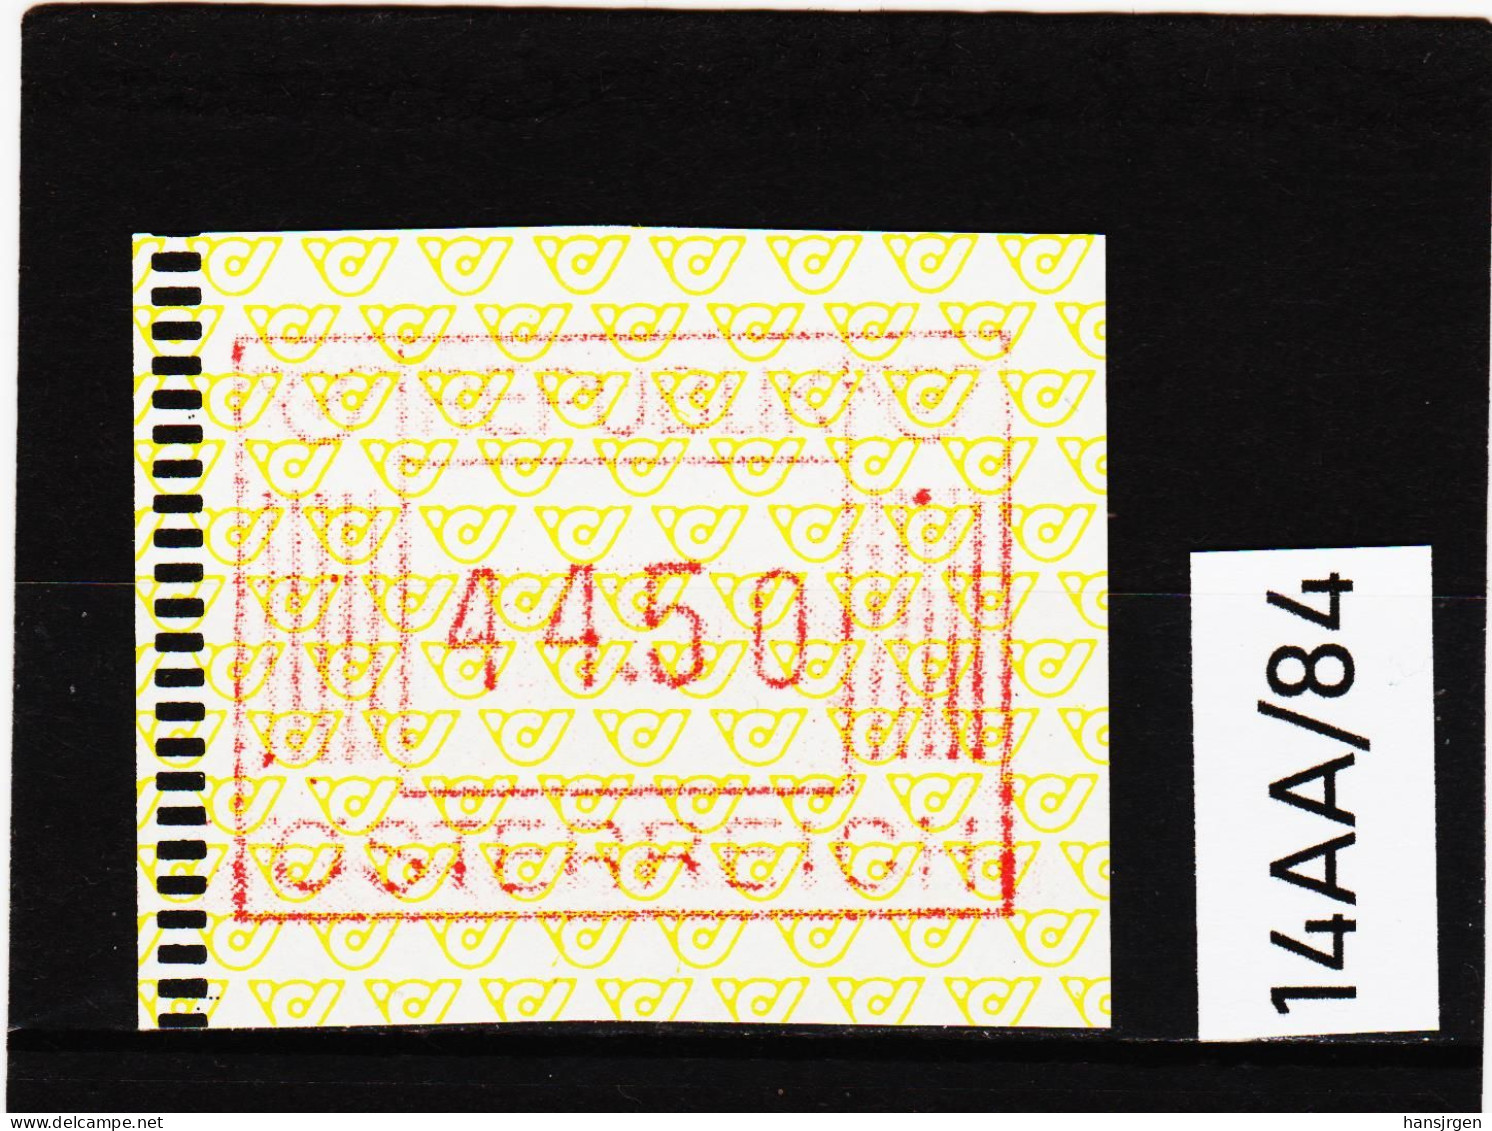 14AA/84  ÖSTERREICH 1983 AUTOMATENMARKEN 1. AUSGABE  44,50 SCHILLING   ** Postfrisch - Timbres De Distributeurs [ATM]